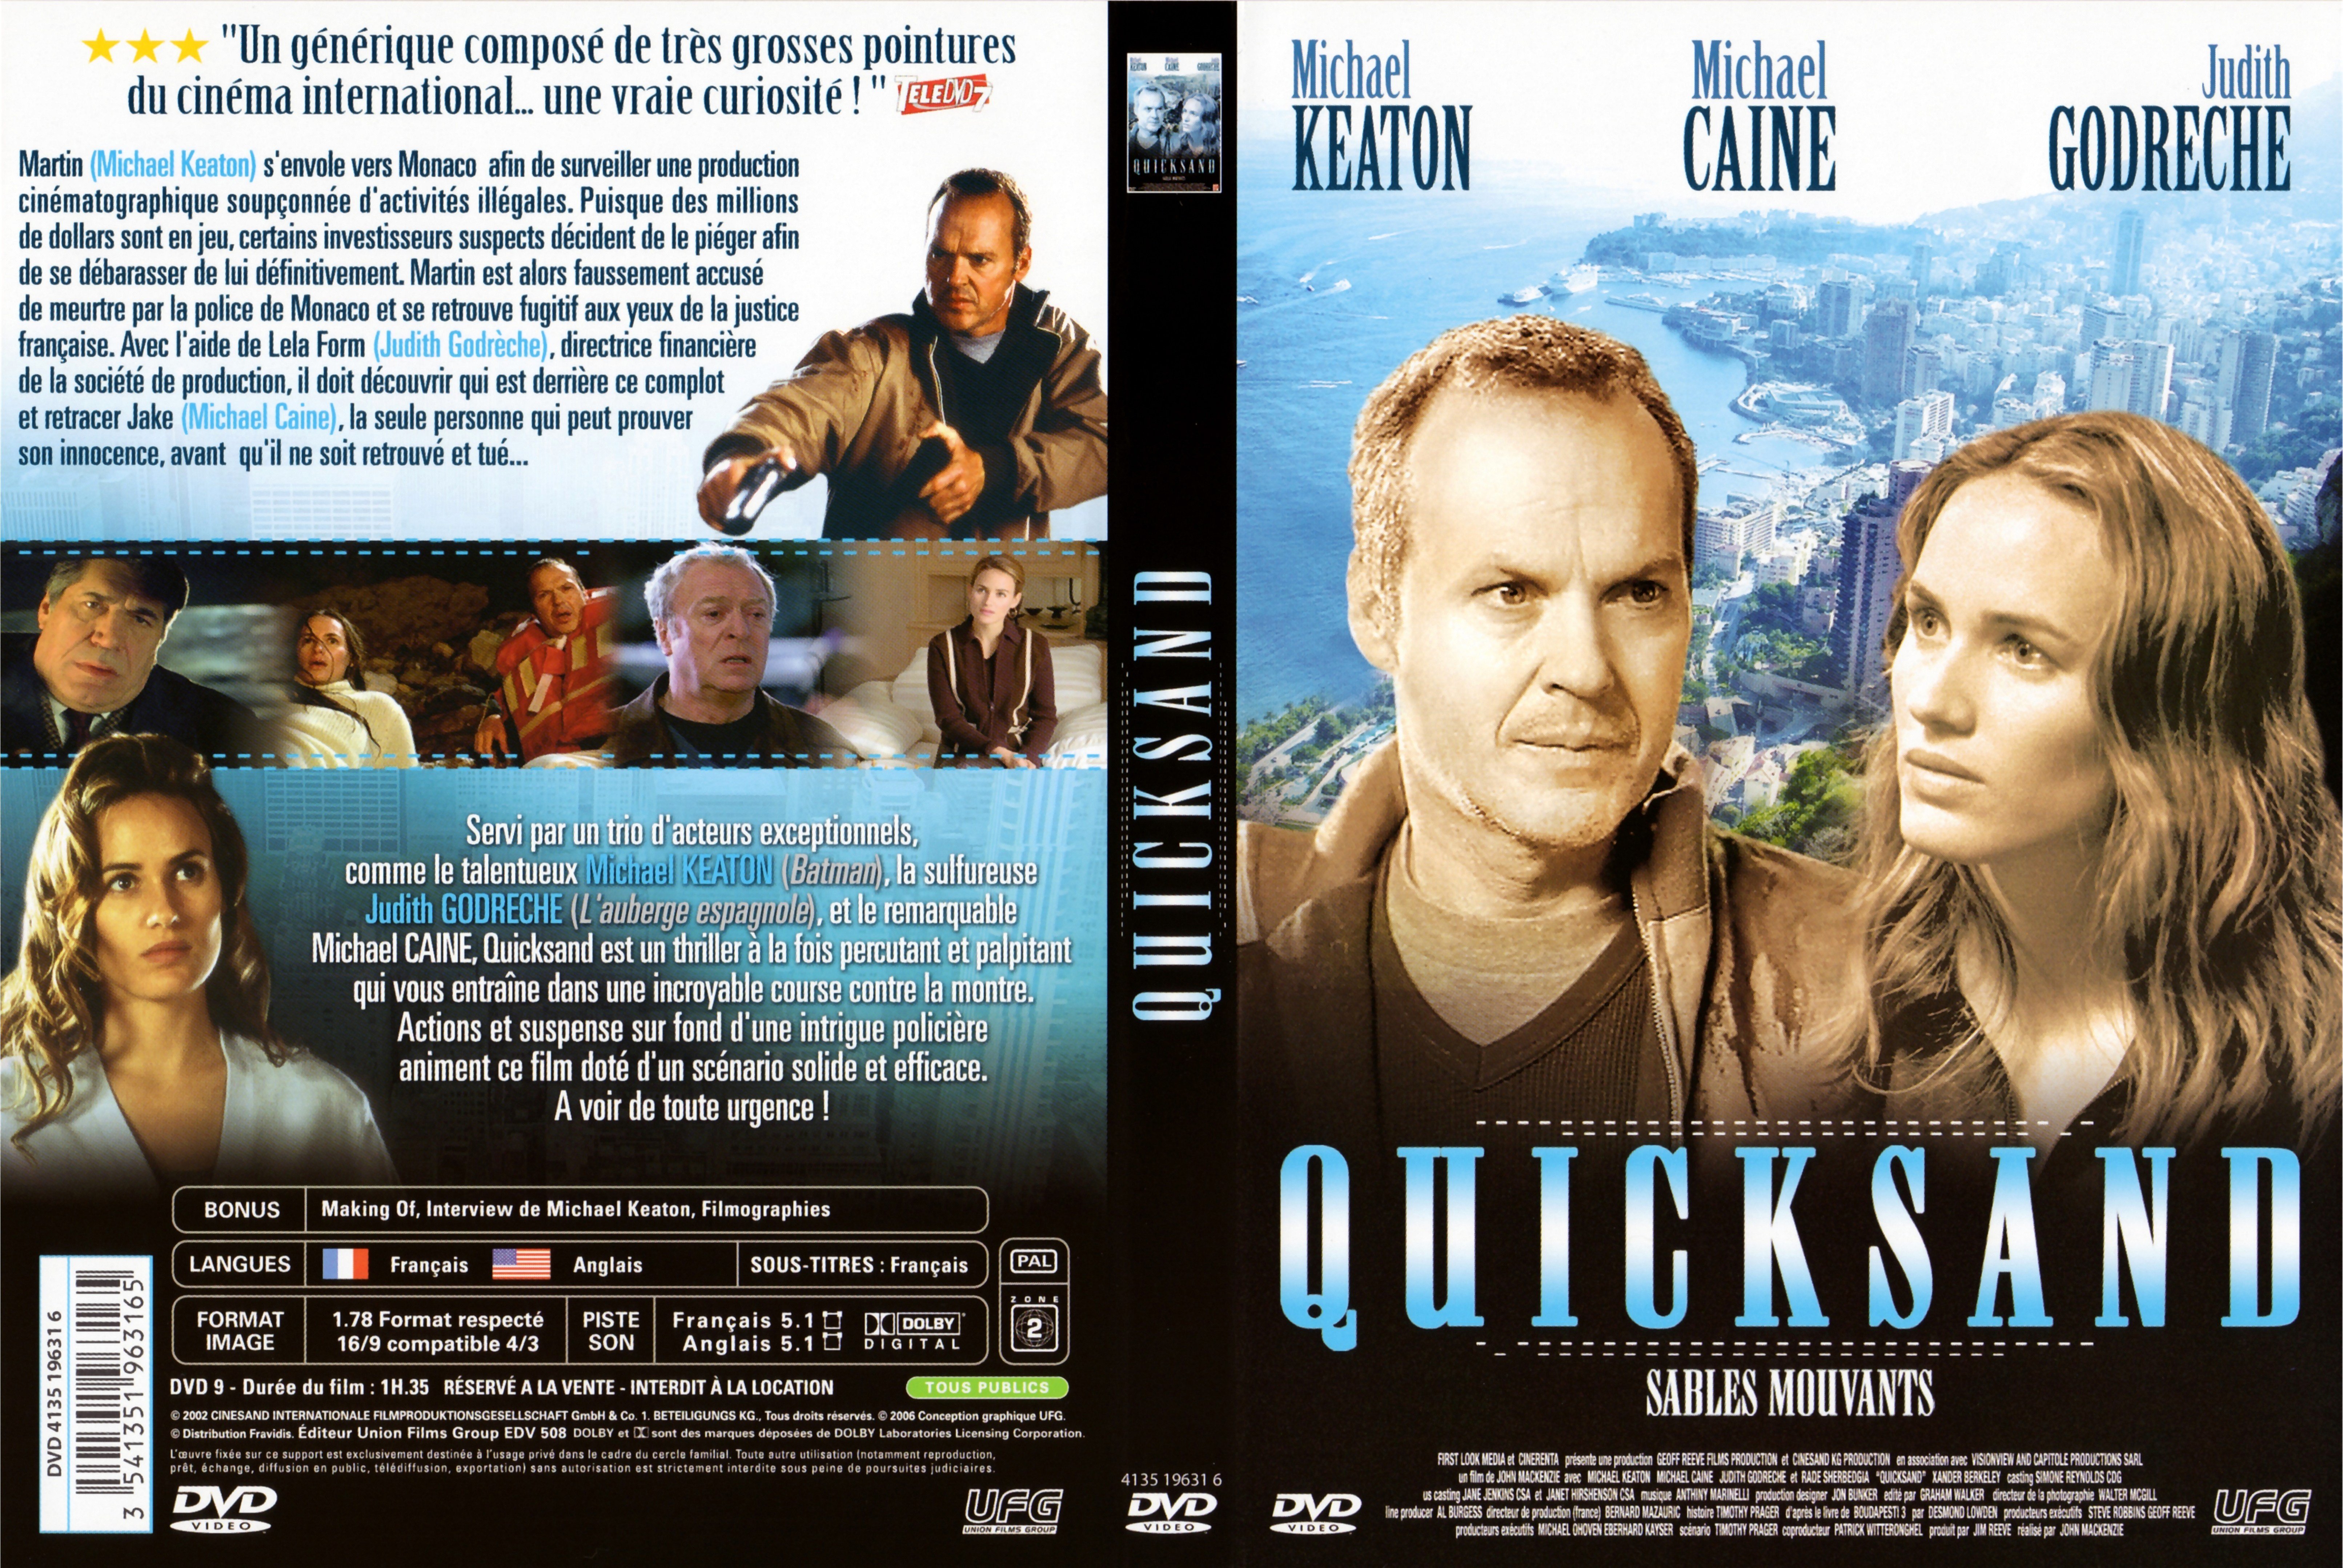 Jaquette DVD Quicksand v2